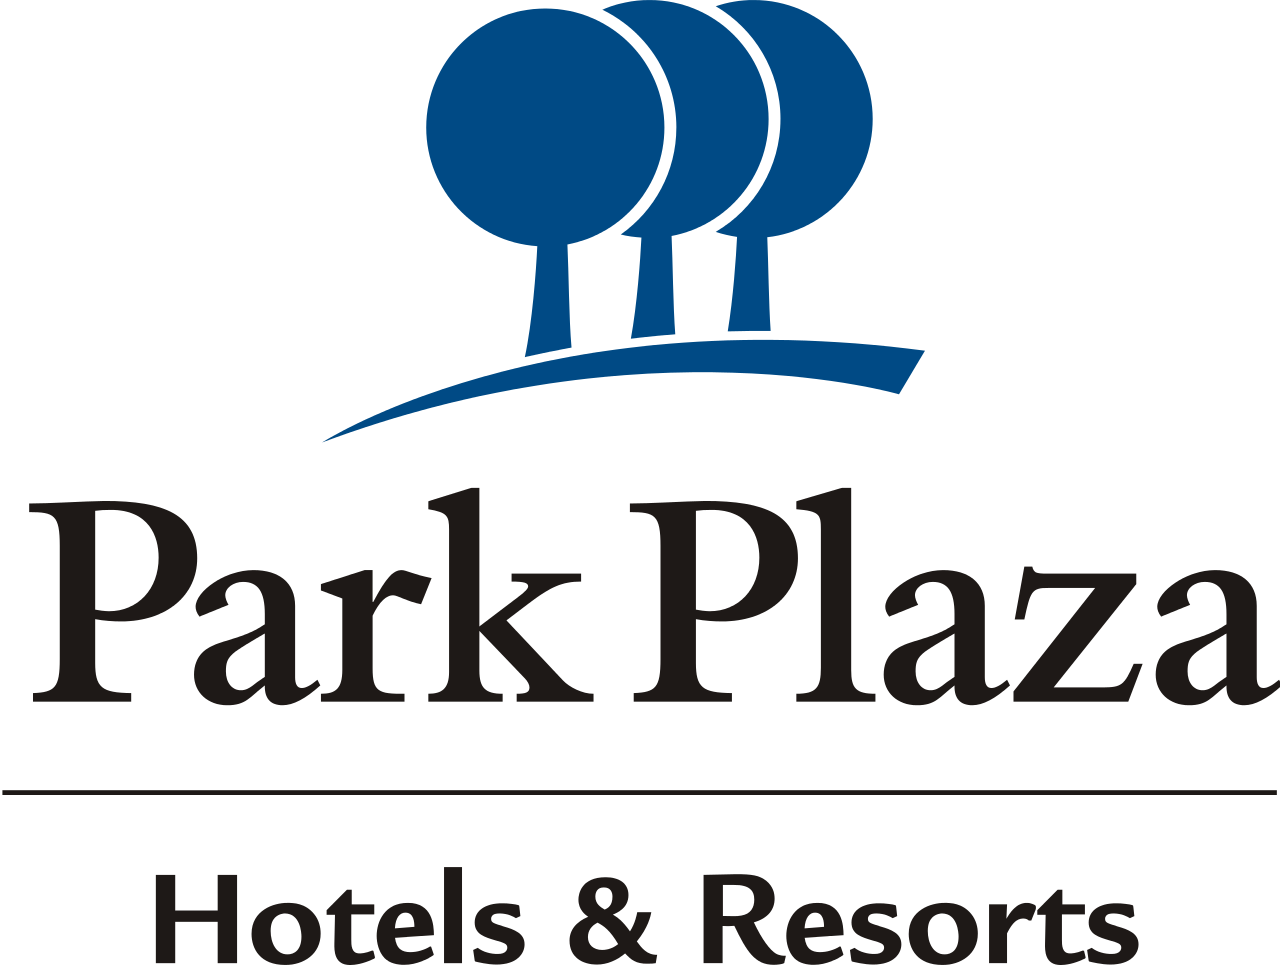 Park Plaza Hotels Logo - Park Plaza Hotel Logo Clipart (1280x967), Png Download